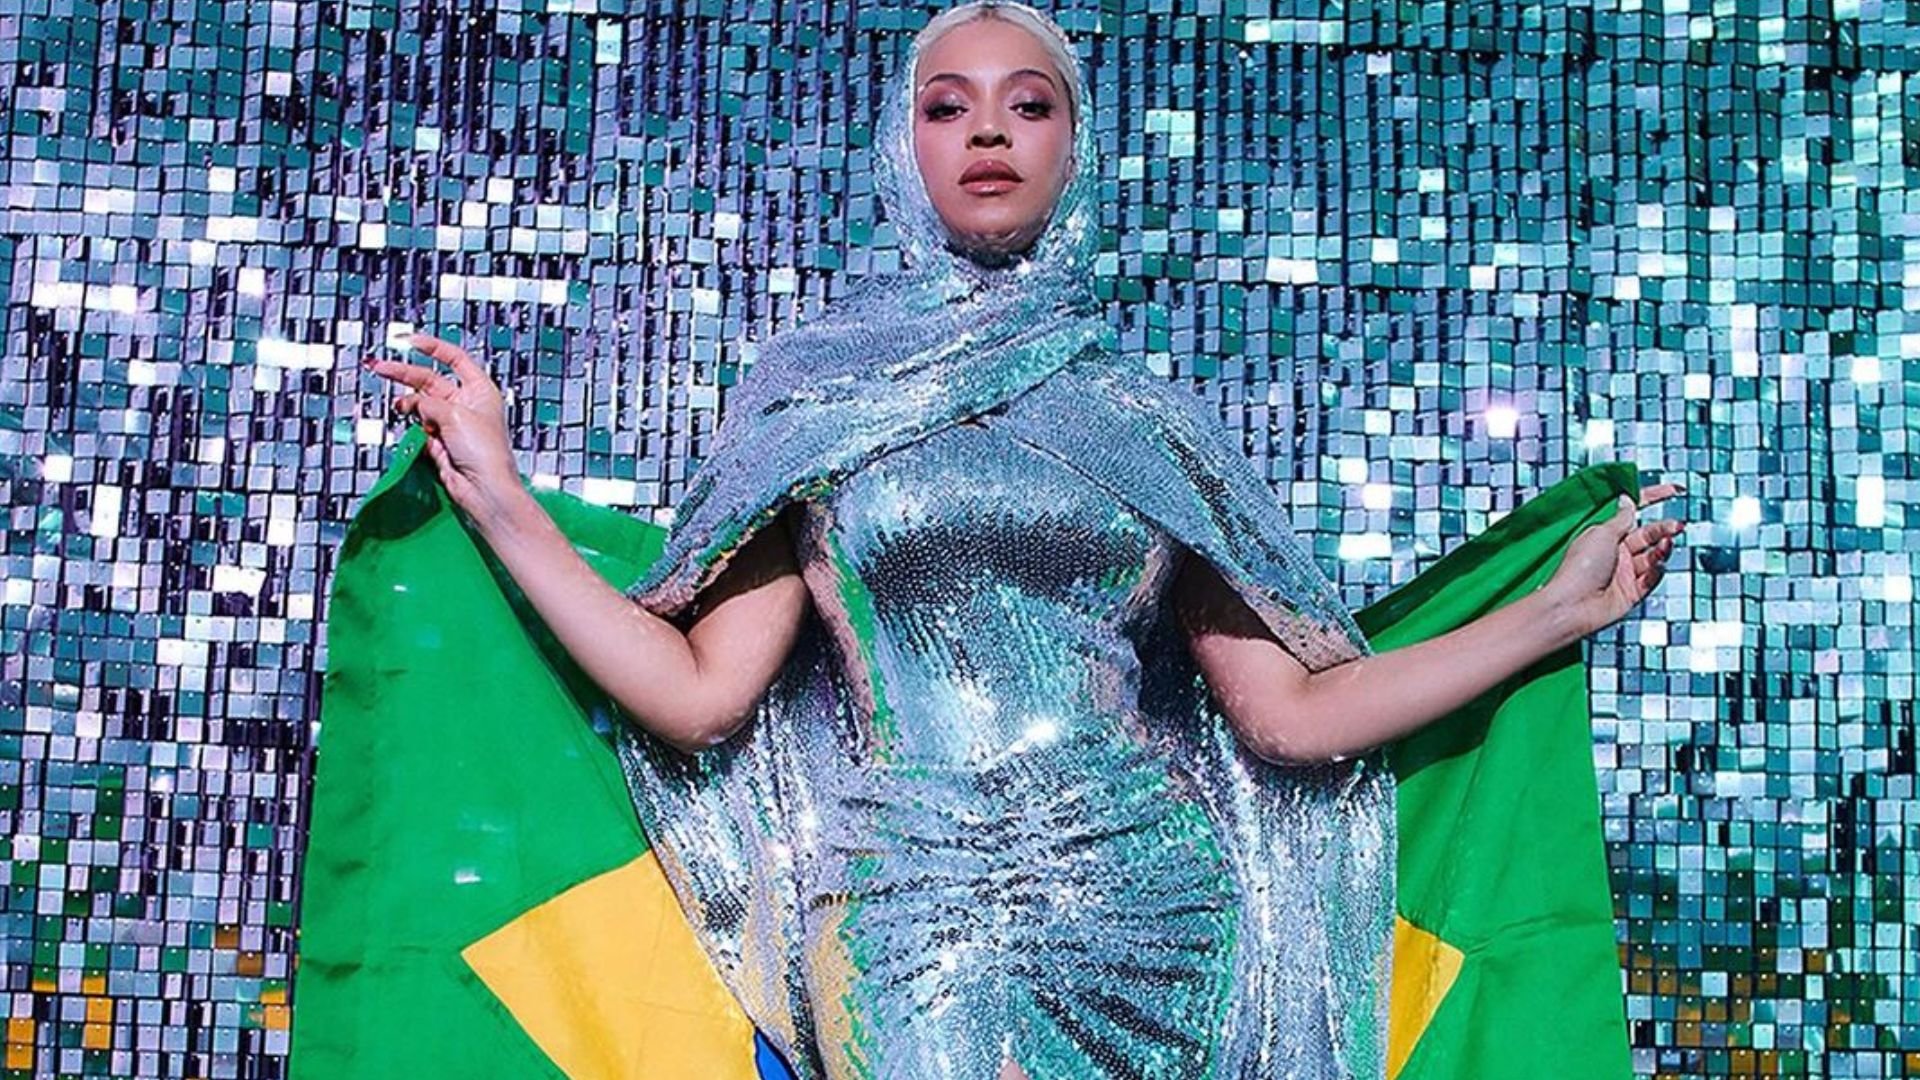 Cantora americana visitou o país de surpresa na noite desta quinta-feira para agradecer a seus fãs brasileiros